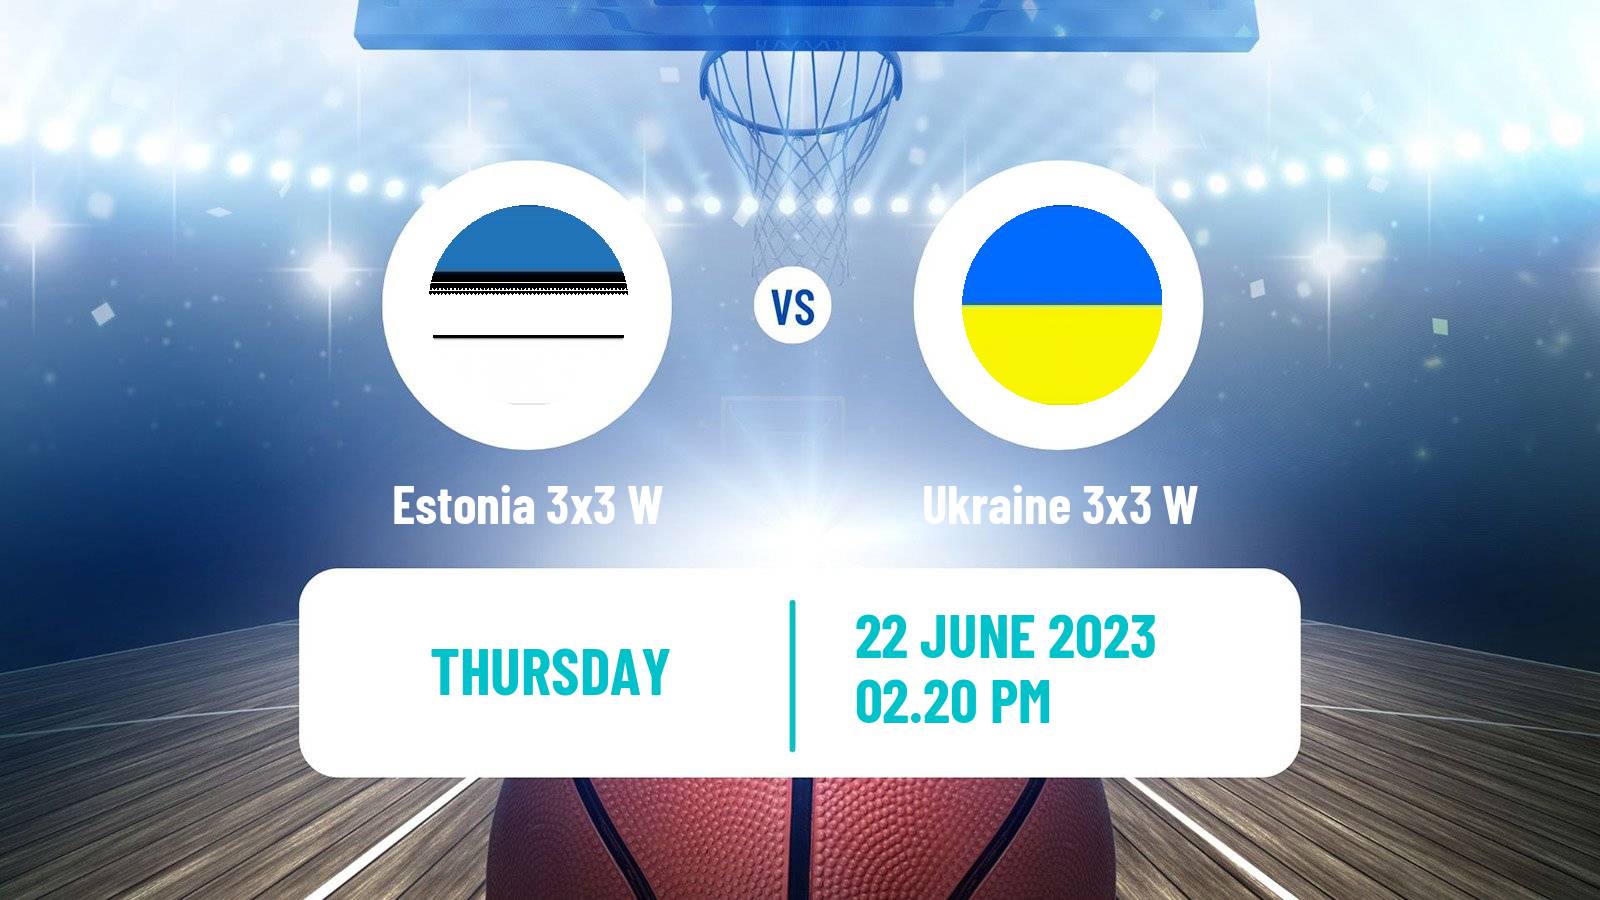 Basketball European Games 3x3 Women Estonia 3x3 W - Ukraine 3x3 W